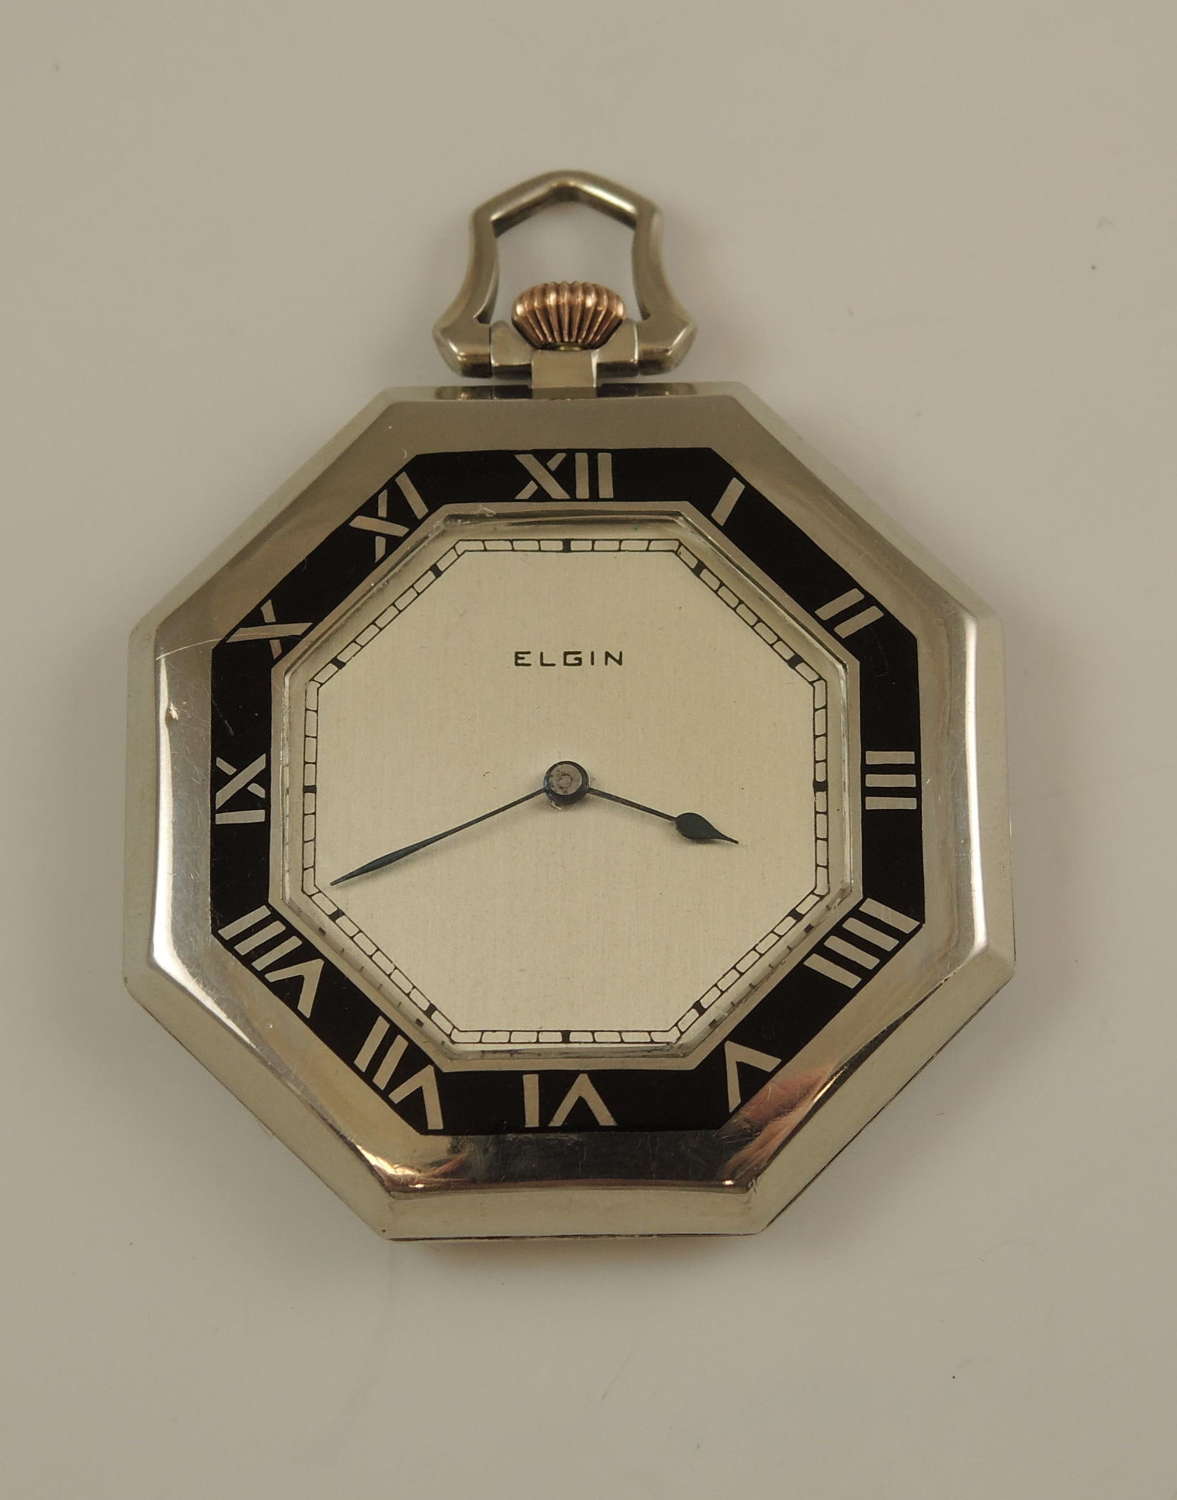 Superb Art Deco Elgin pocket watch with enamel bezel c1933